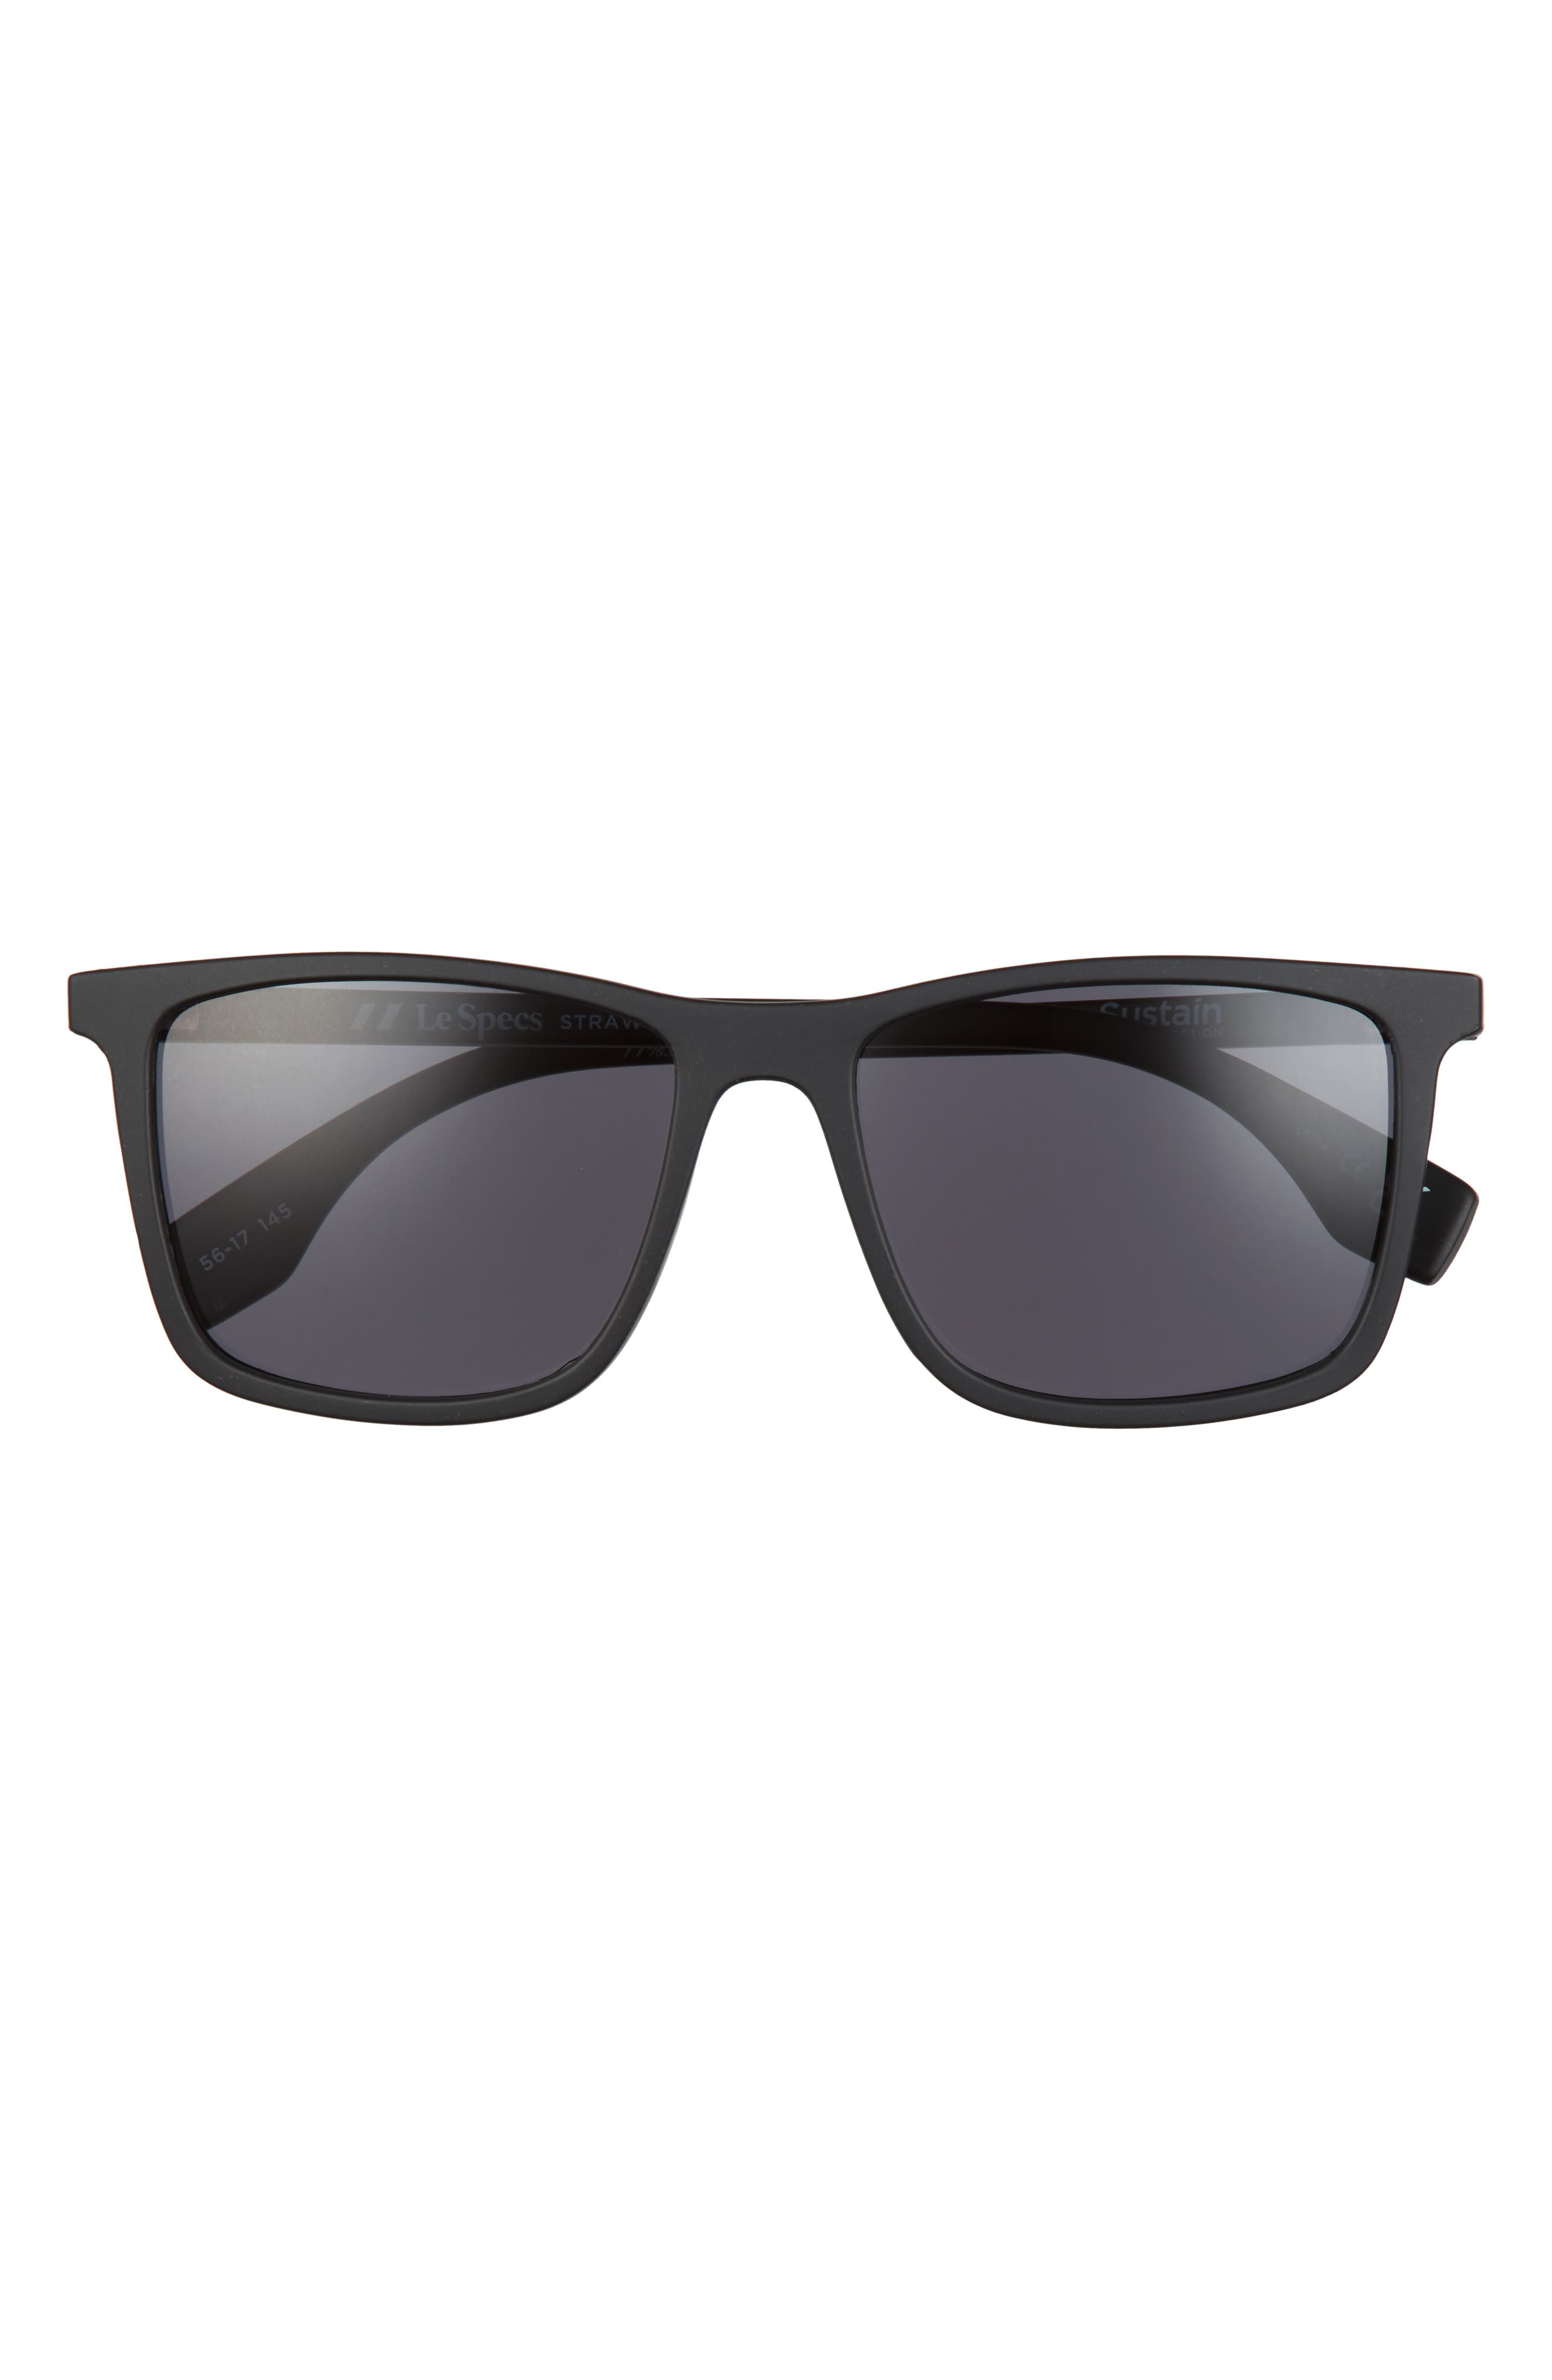 Le Specs Straw & Order 56mm Square Sunglasses in Black Straw/Smoke Mono at Nordstrom